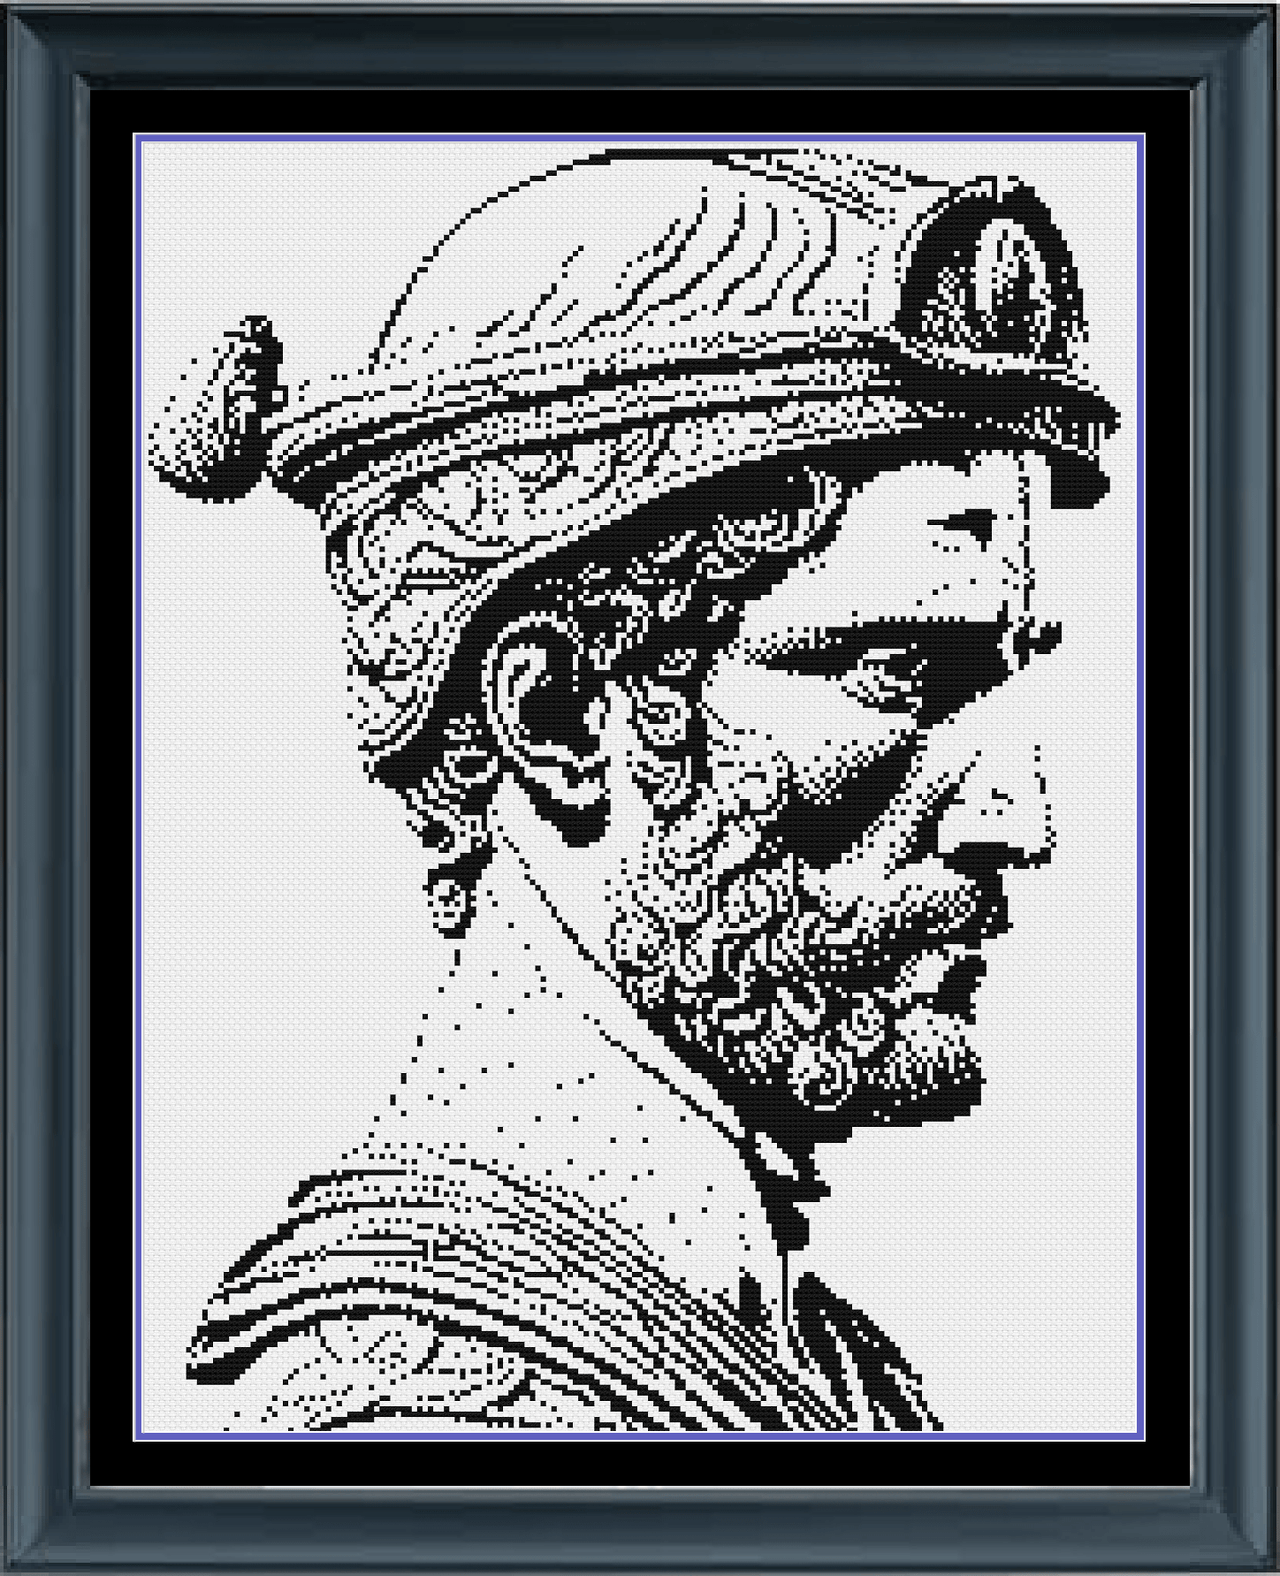 Stitching Jules Design Cross Stitch Pattern Roman Soldier Counted Cross Stitch Pattern | Roman Statue | Monochrome Blackwork | Instant Download PDF